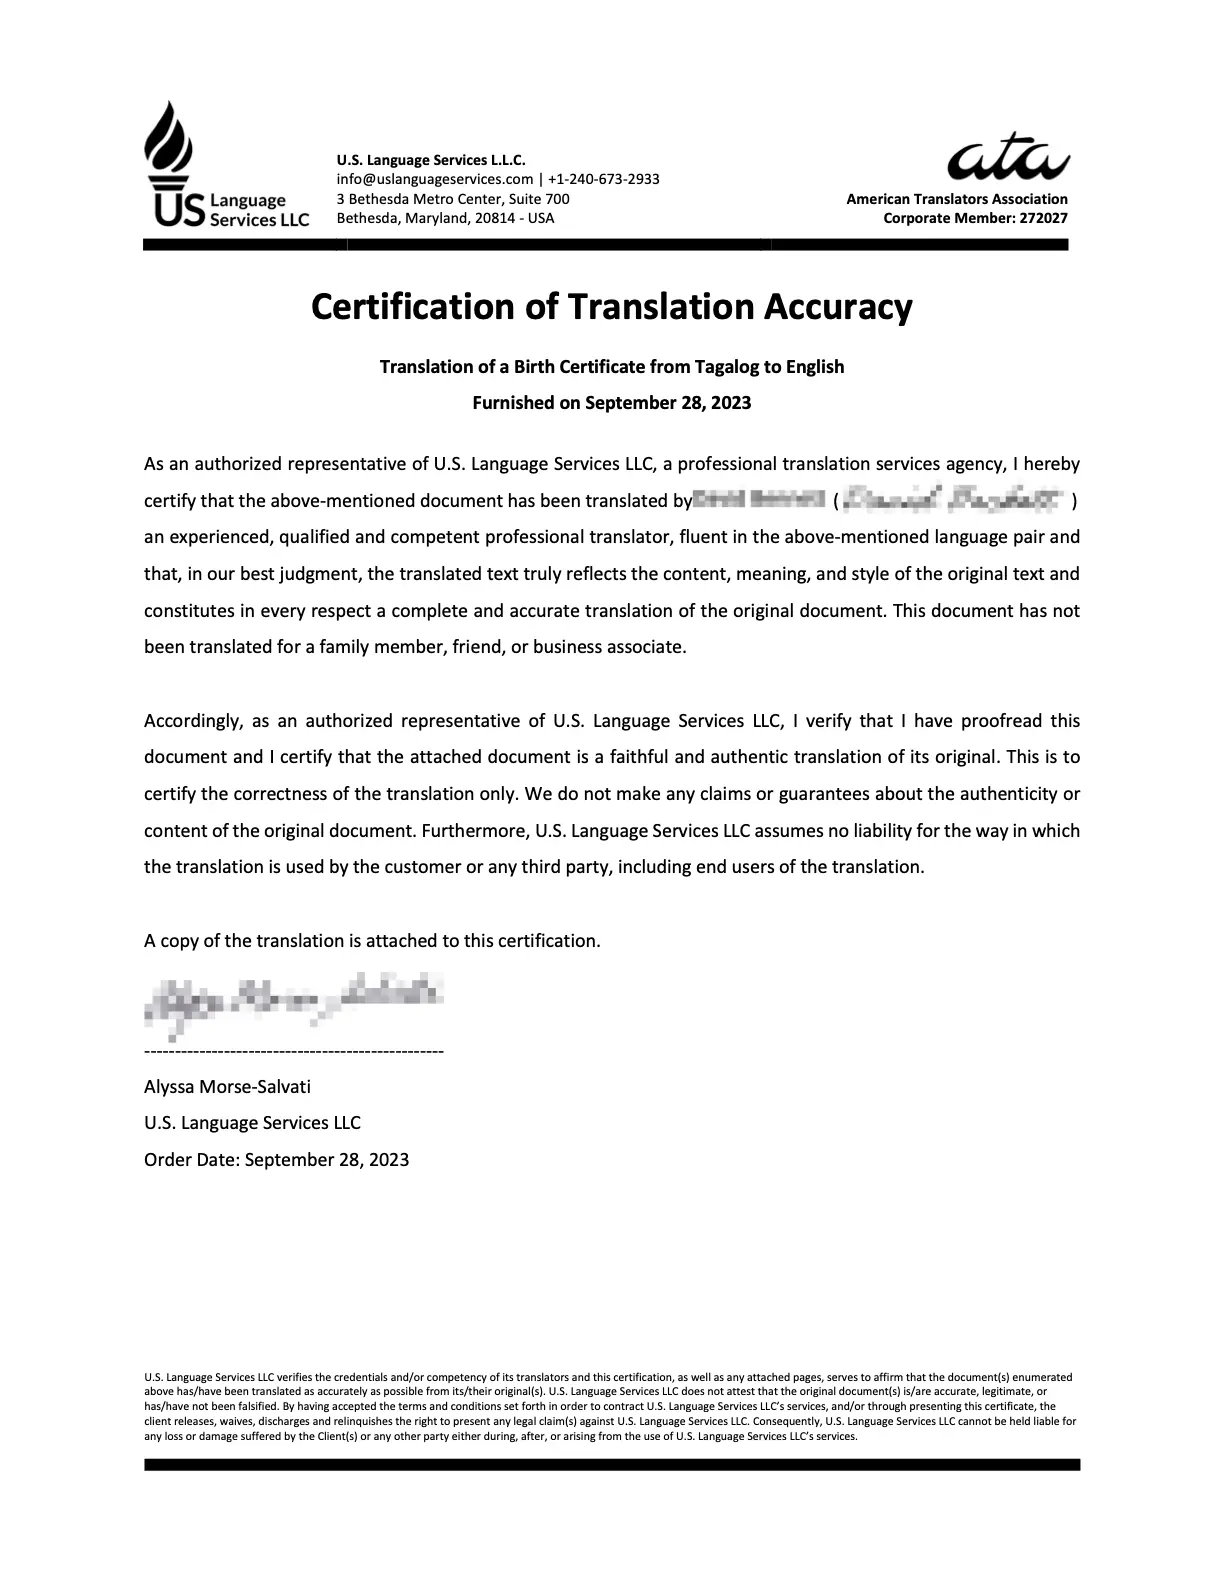 Certified Tagalog to English translation - Certificate Sample